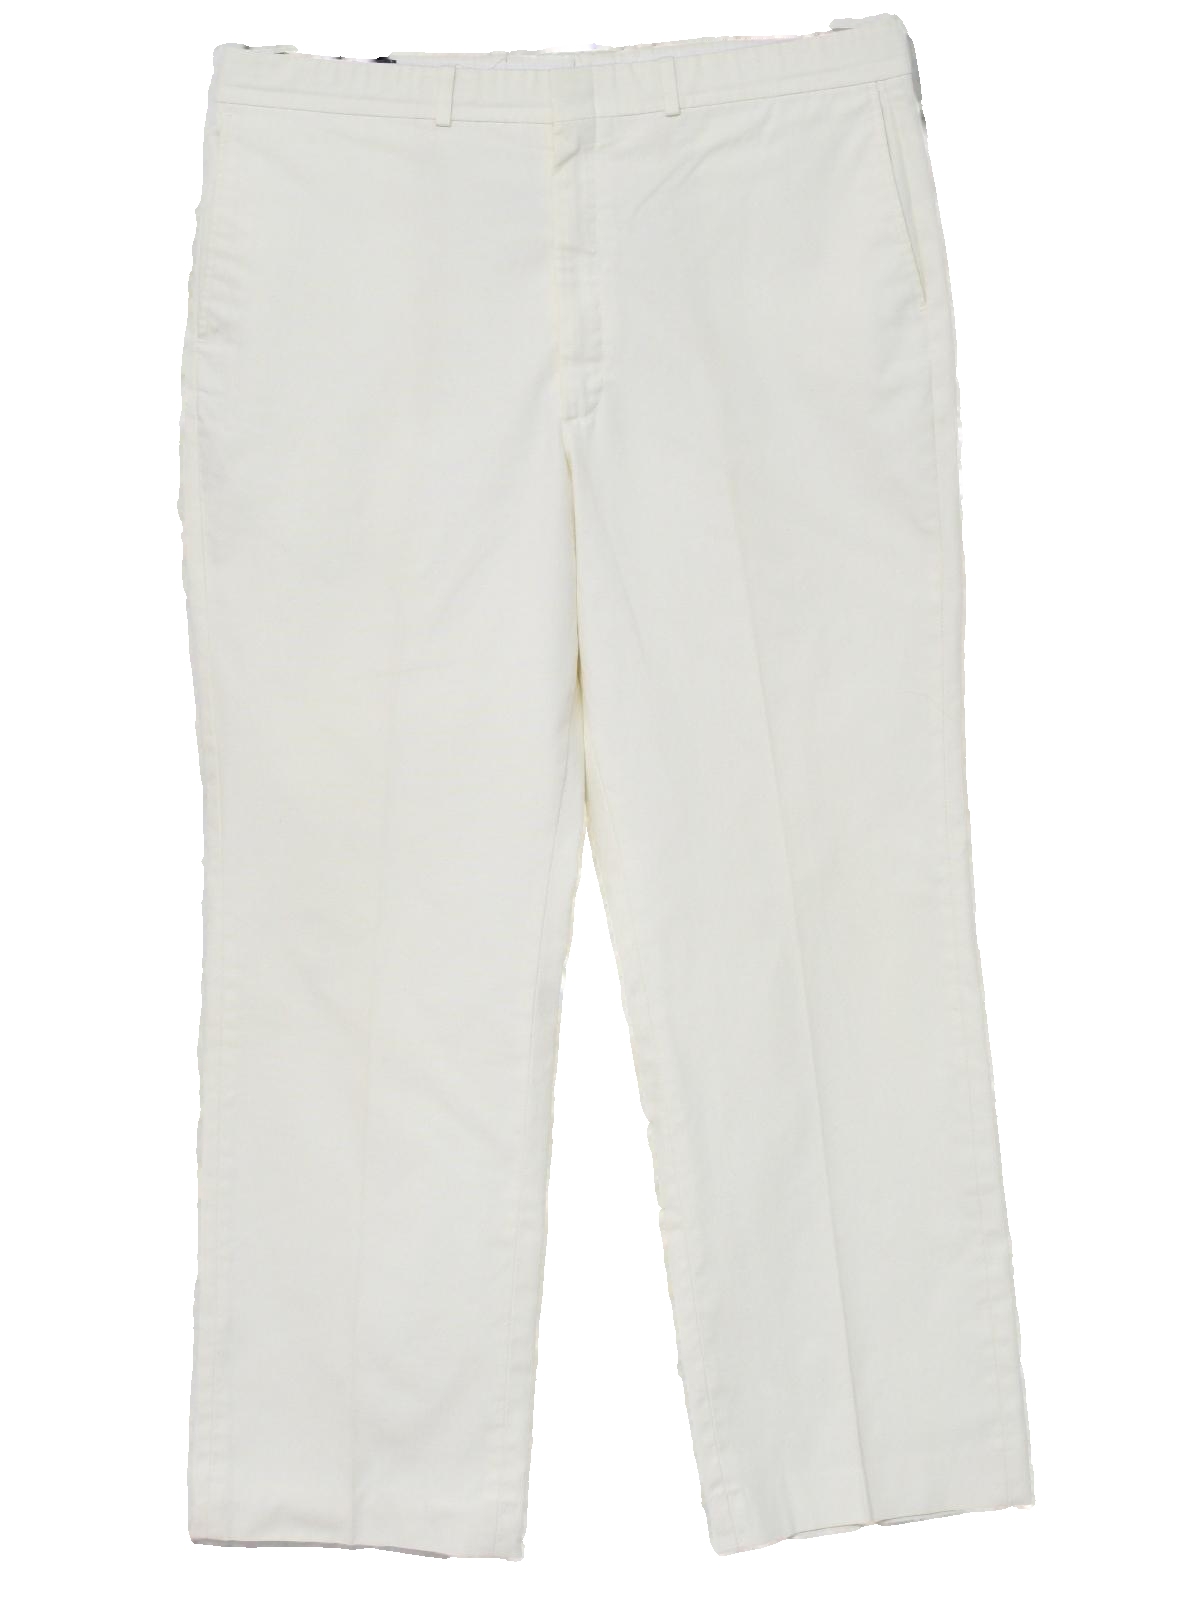 Farah 80's Vintage Pants: 80s -Farah- Mens winter white solid colored ...